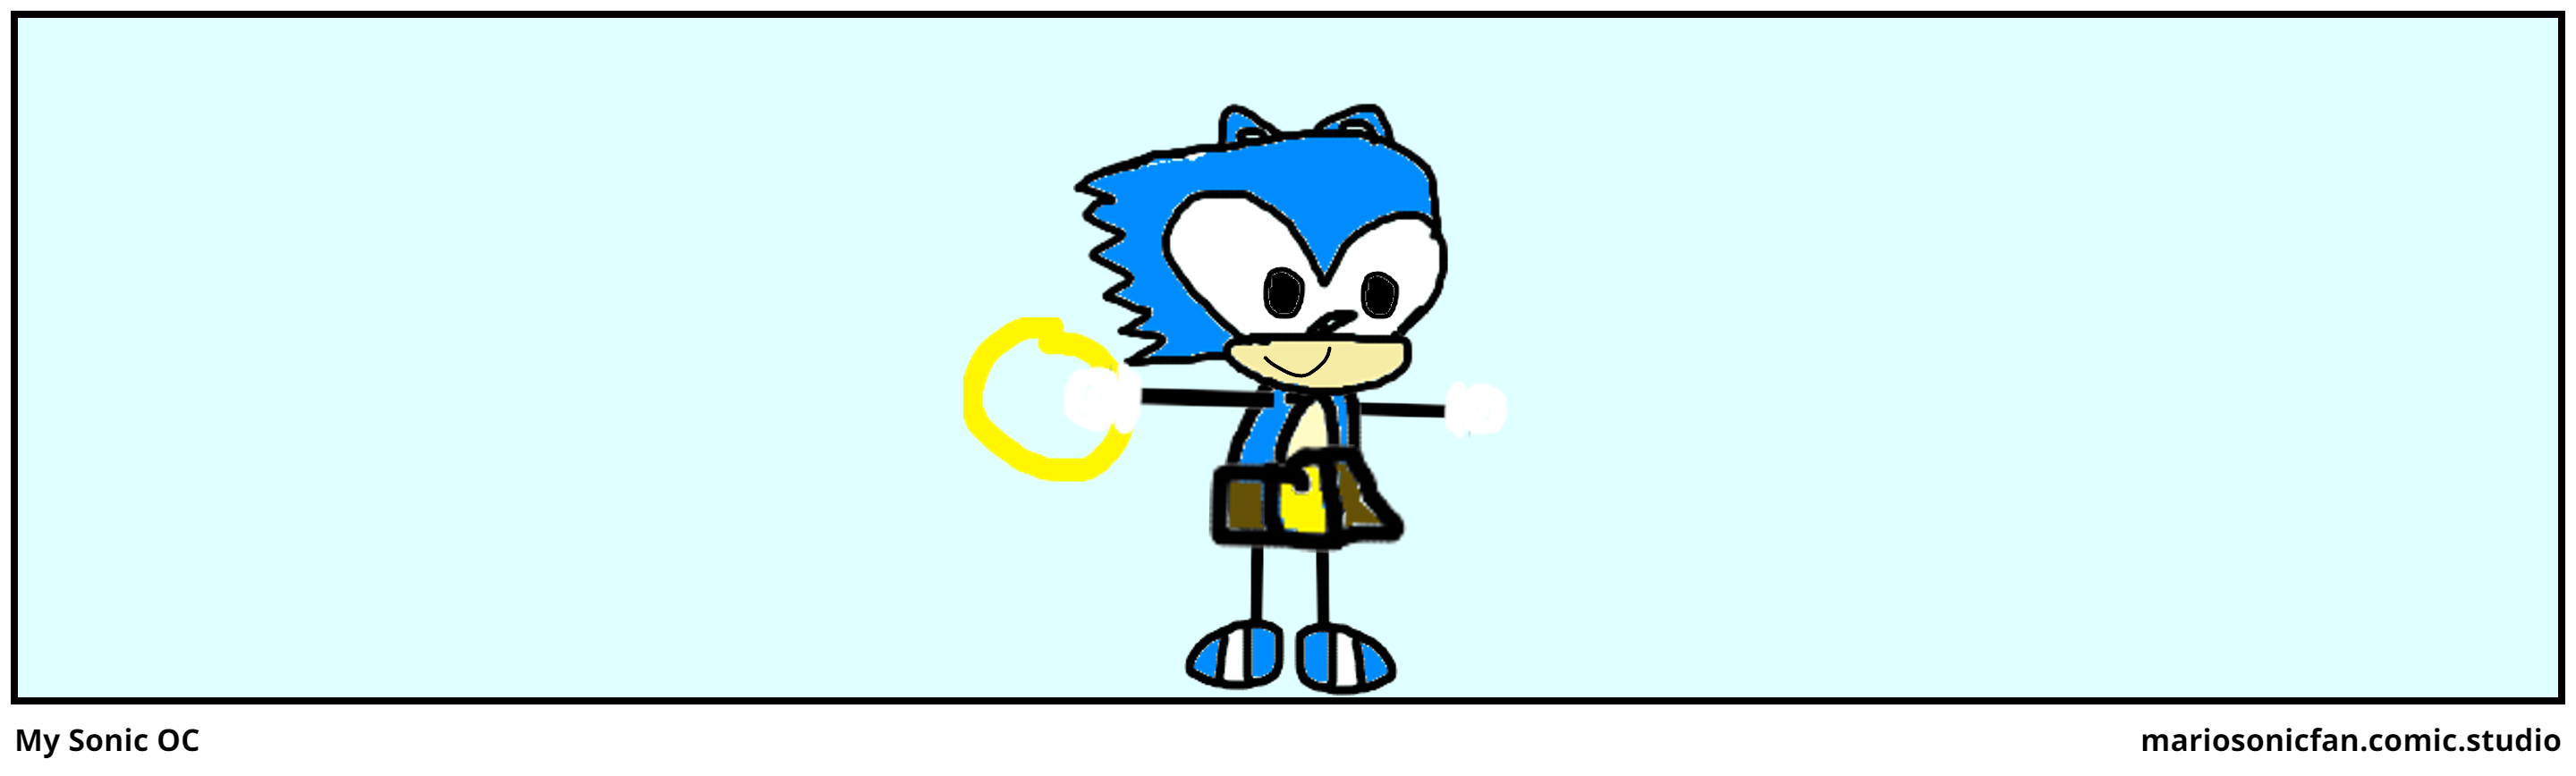 My Sonic OC